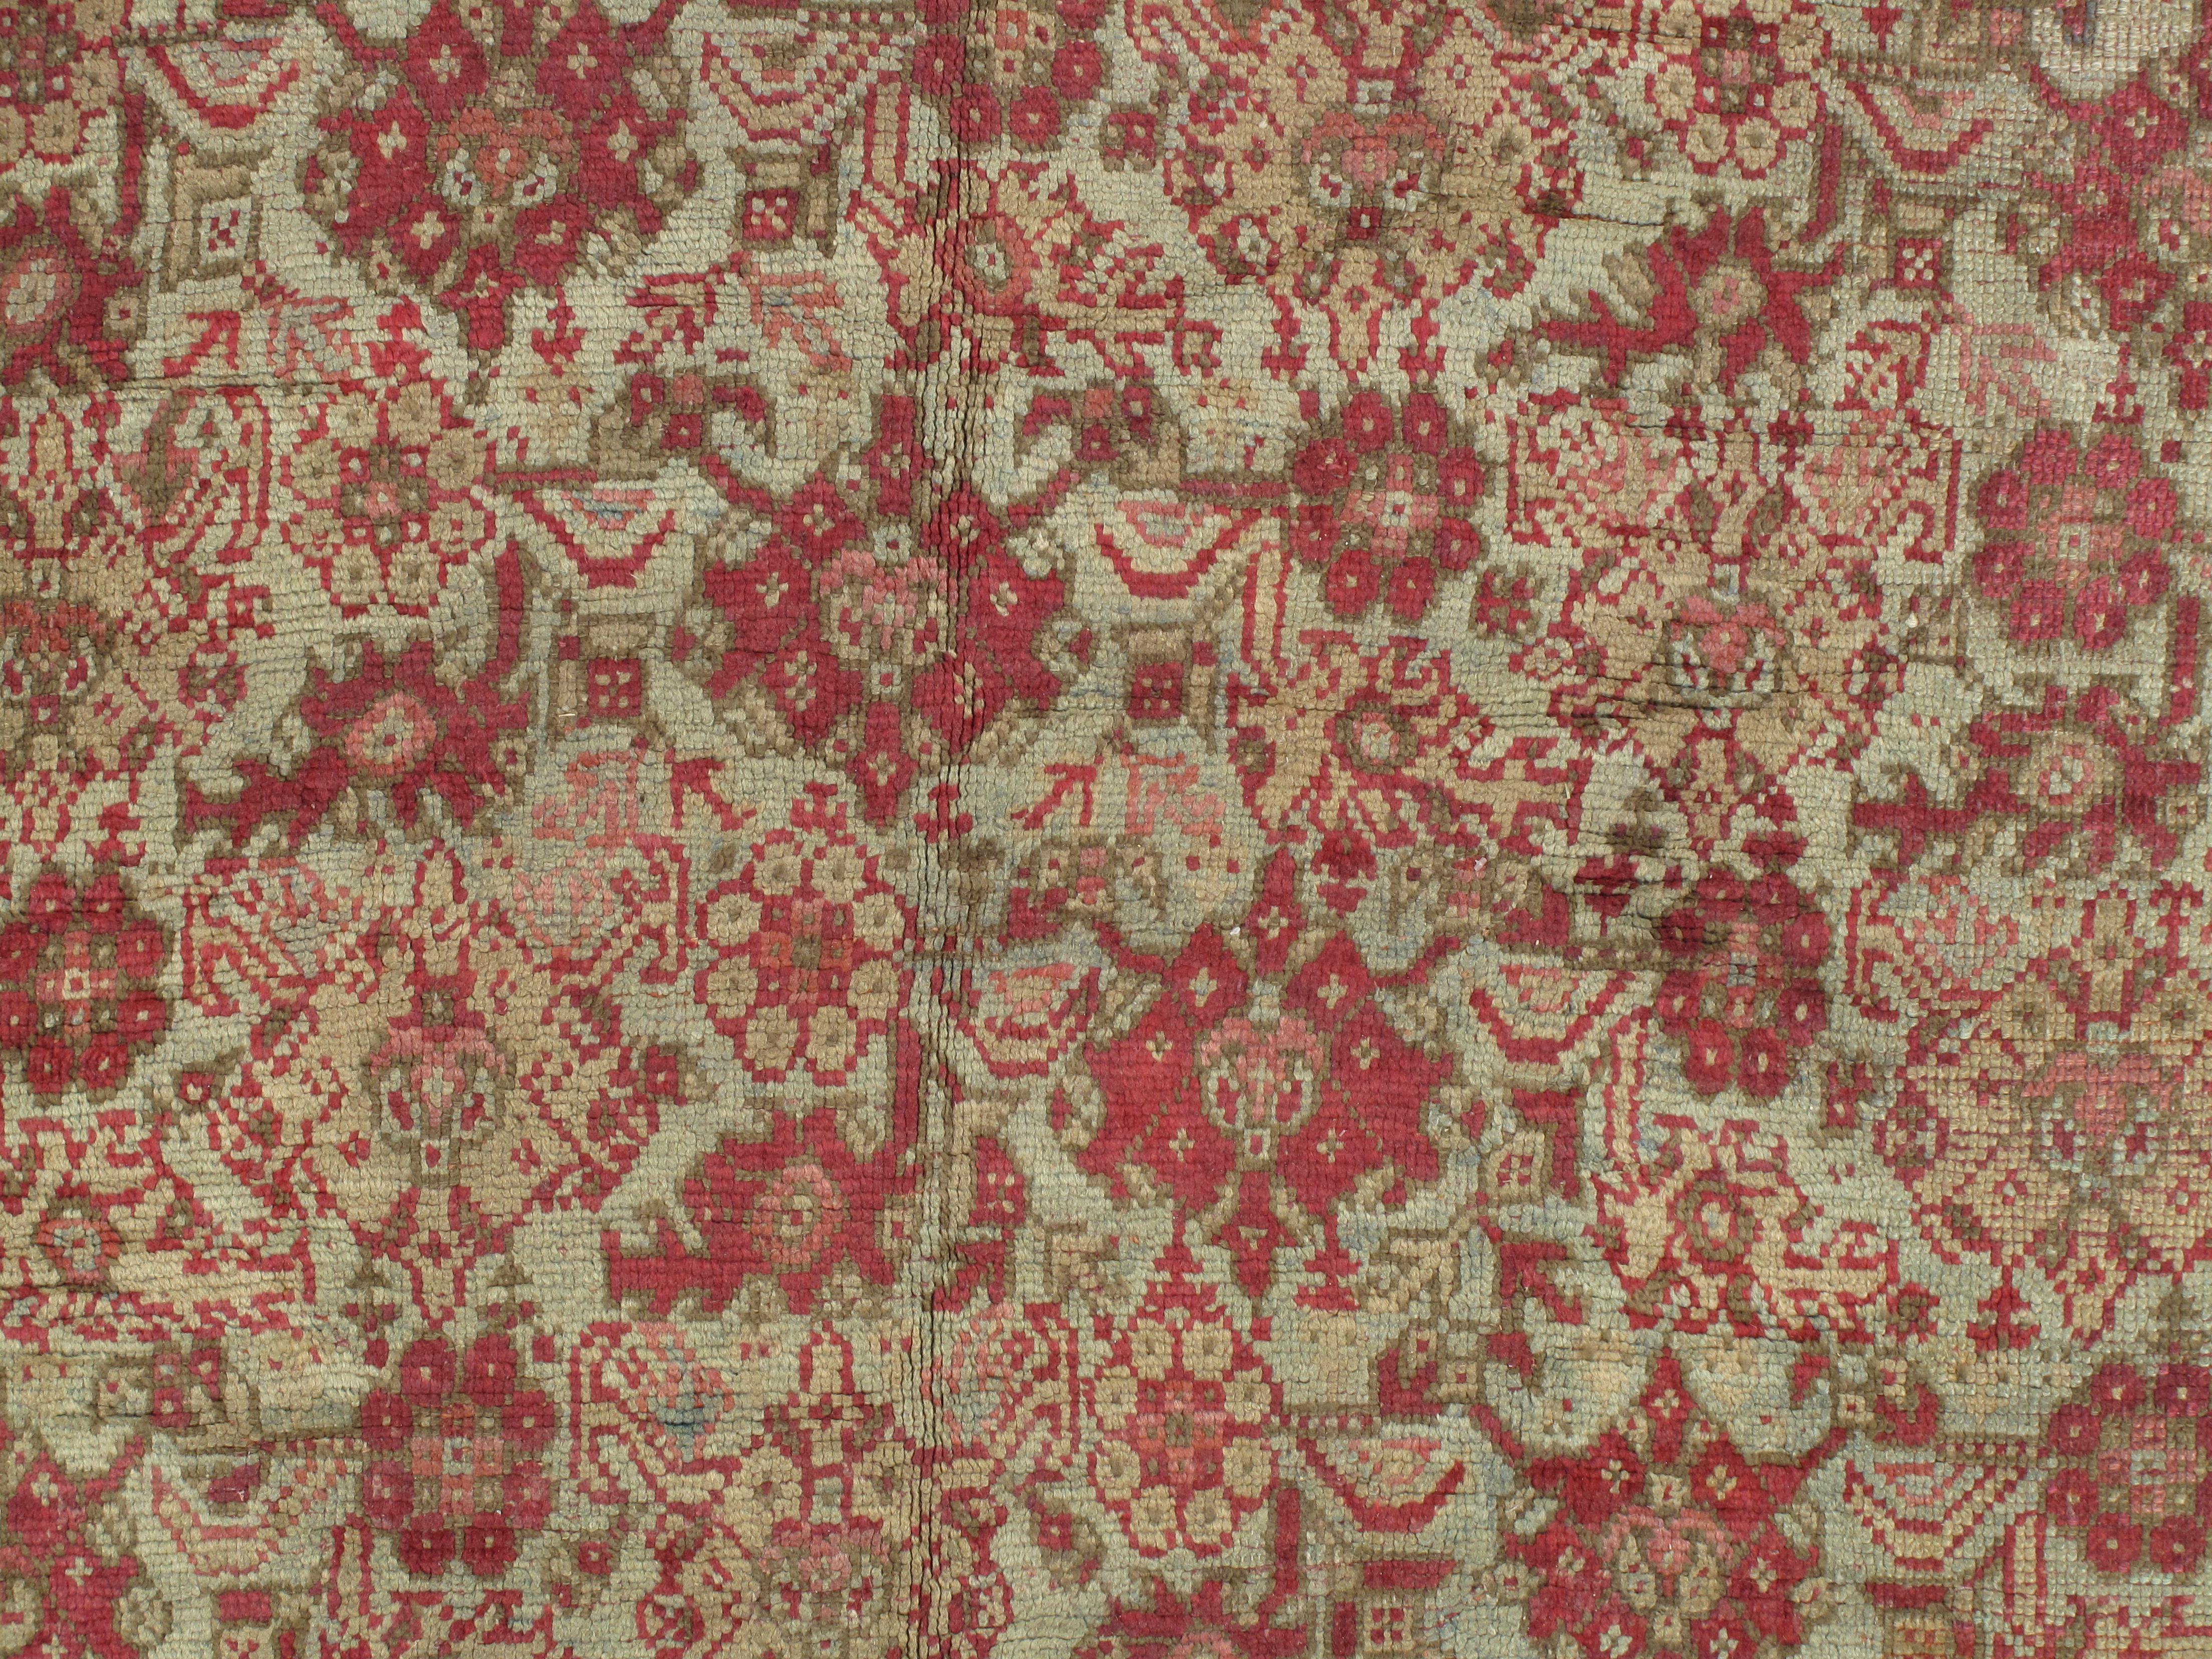 Wool Antique Oushak Carpet, Handmade Oriental Rug, Pale Light Blue, Coral, Raspberry For Sale